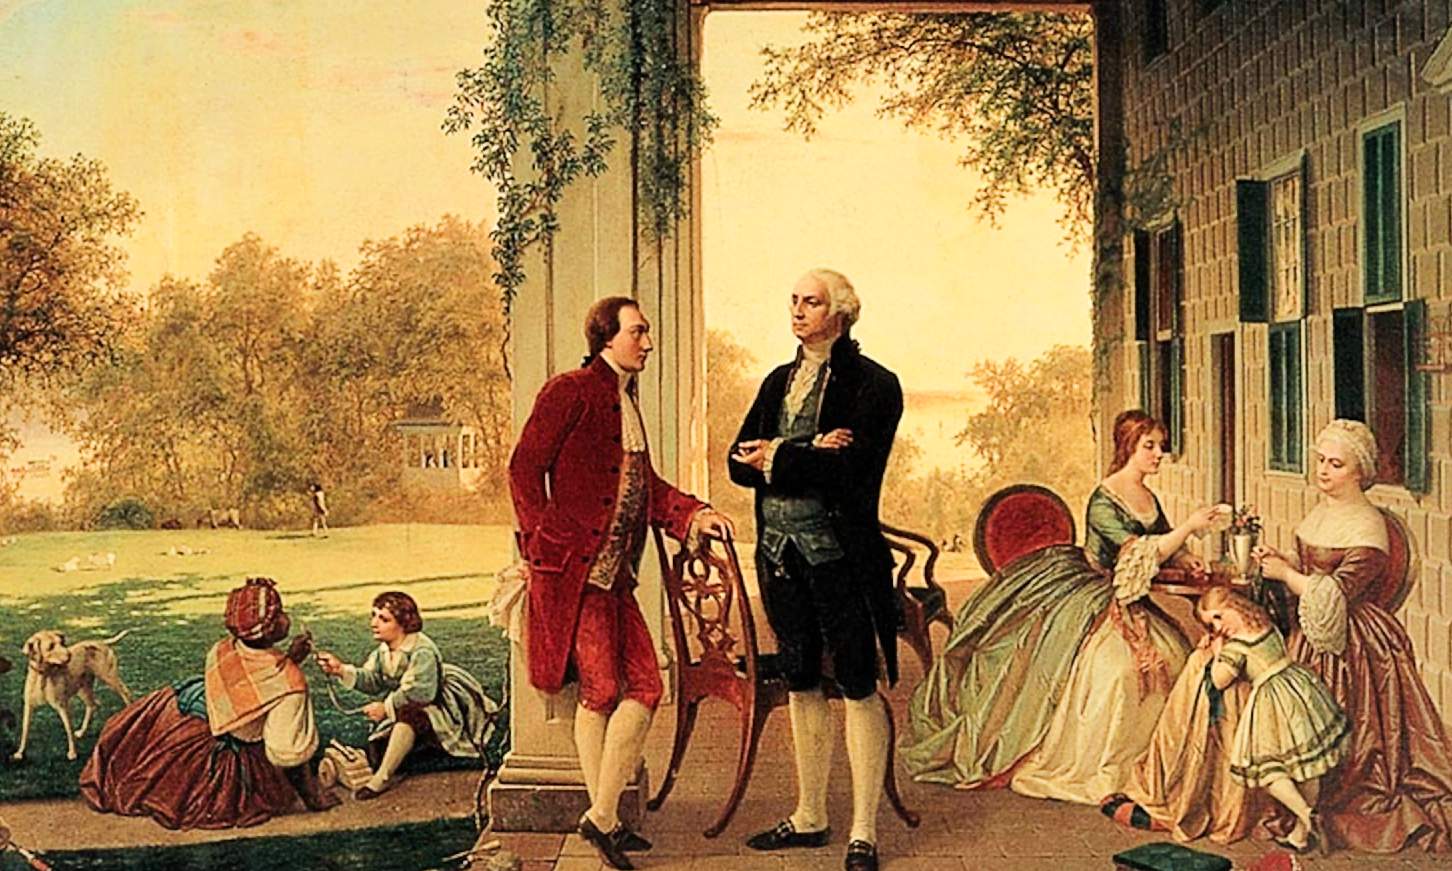 George Washington led the Culper Spy Ring